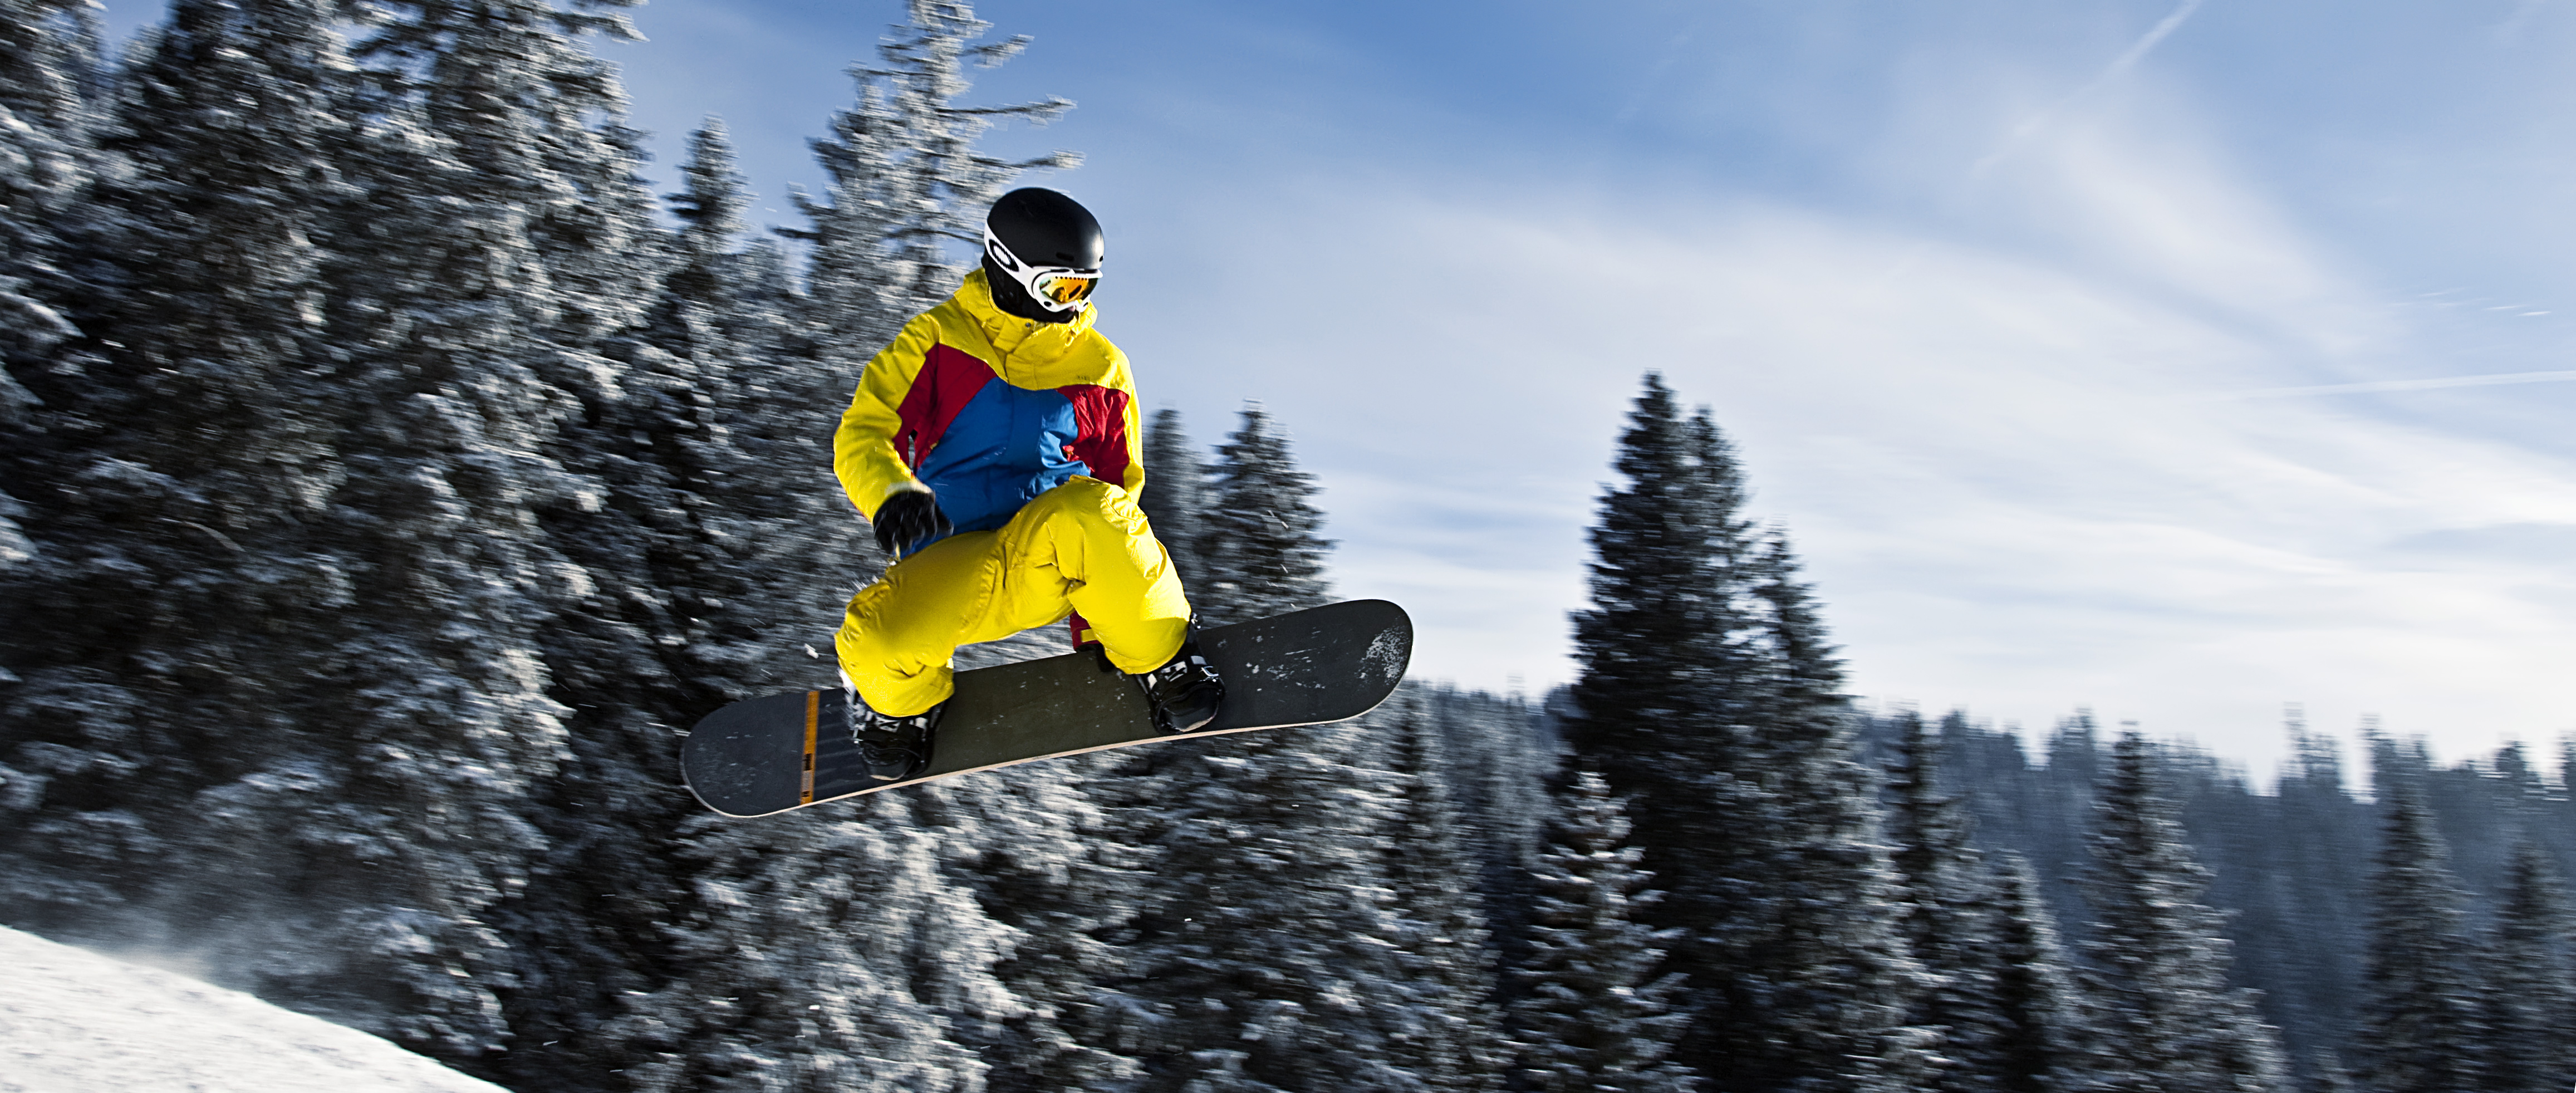 File:Snowboarder in flight (Tannheim, Austria).jpg - Wikimedia Commons